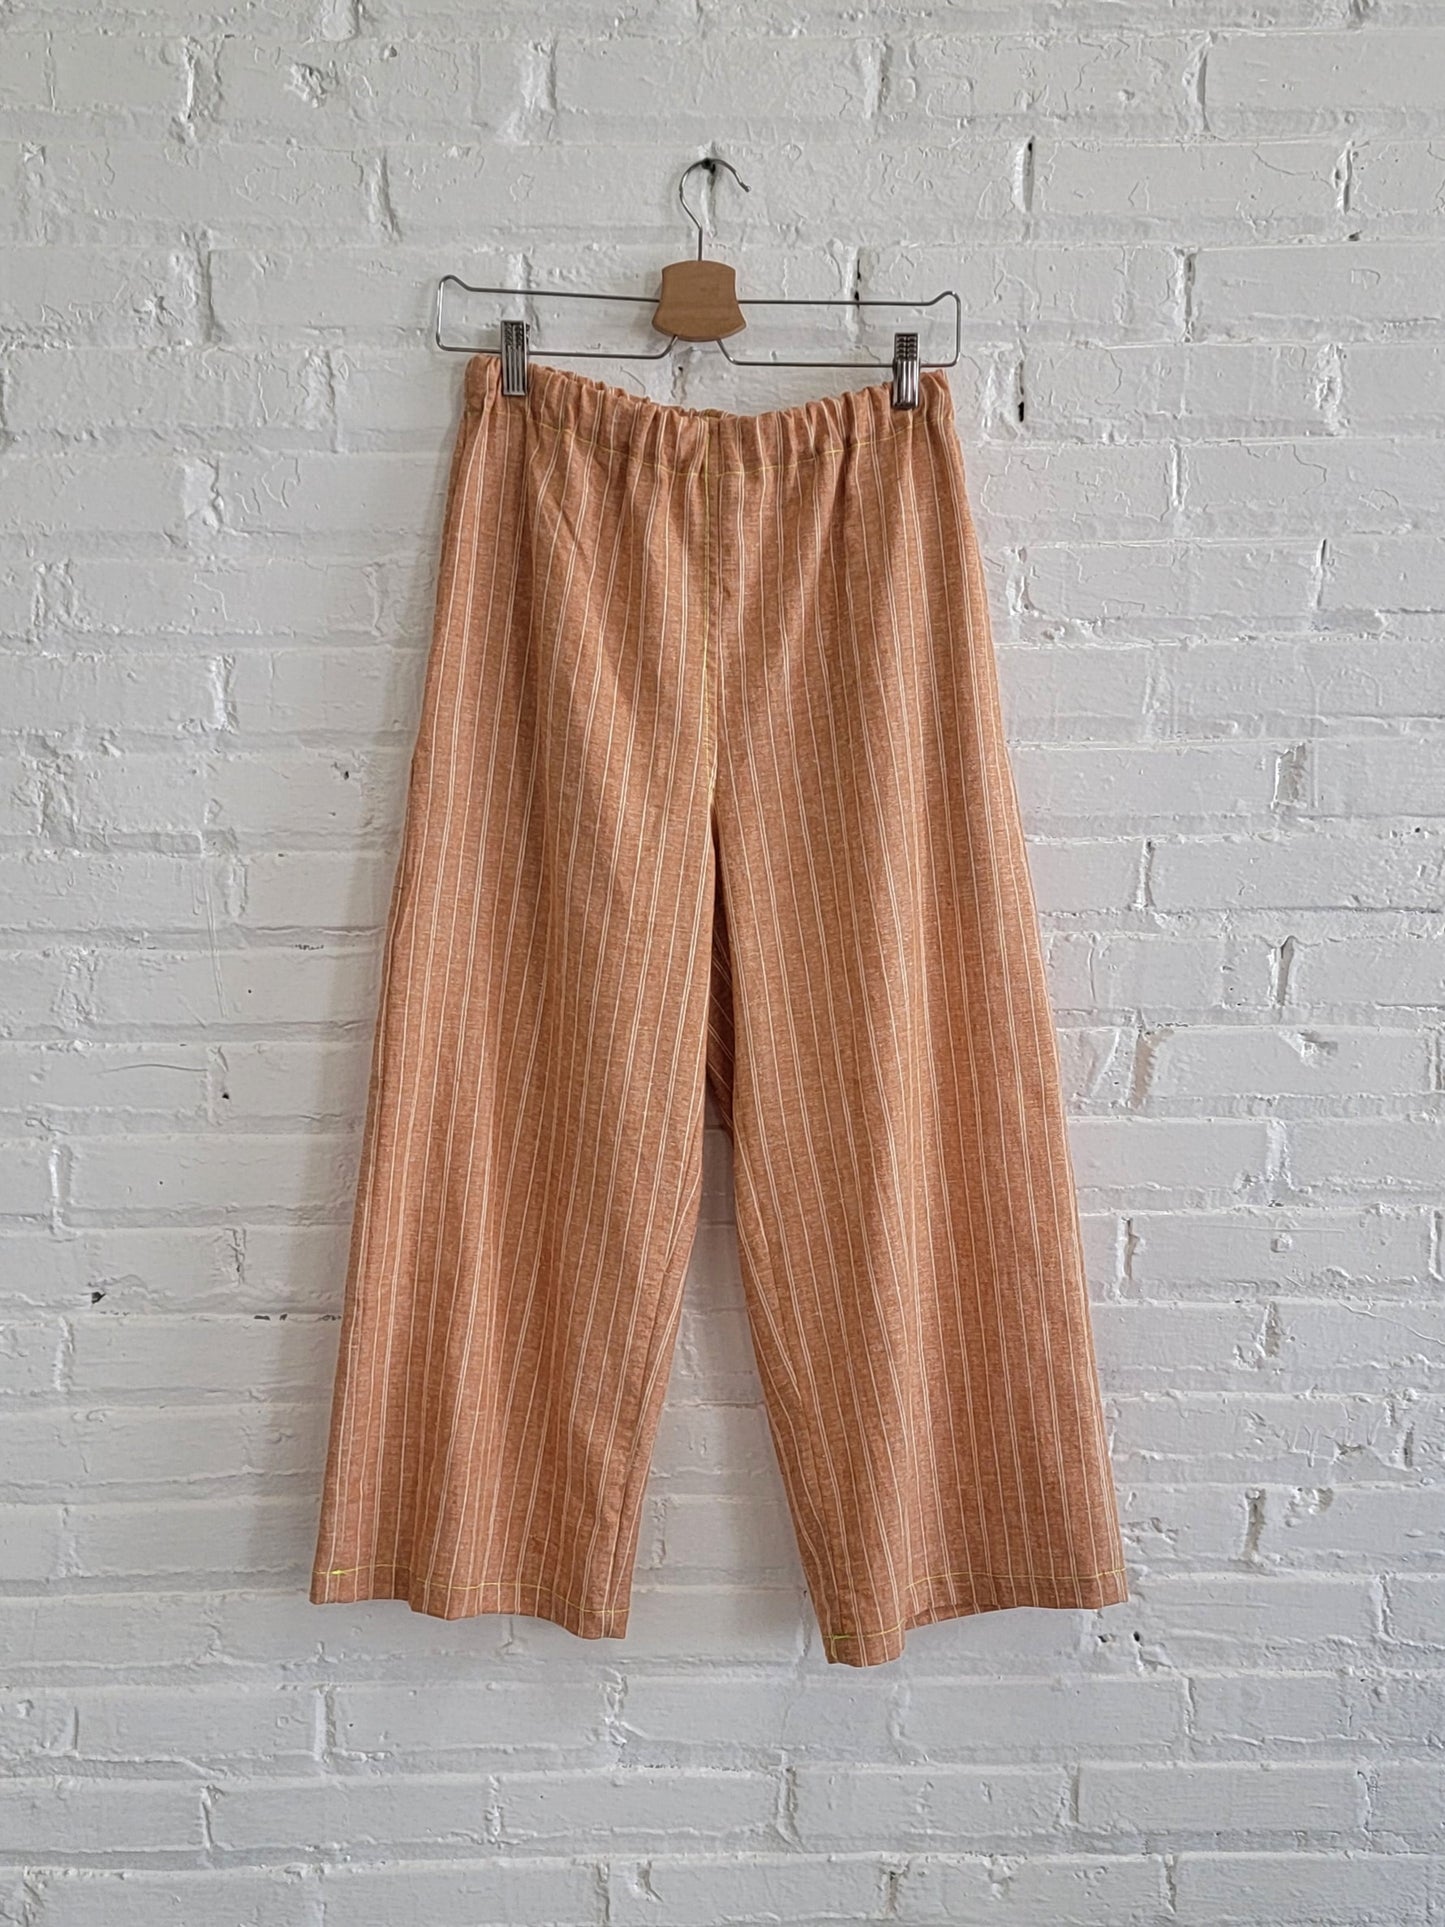 Pocket Pants, orange stripe